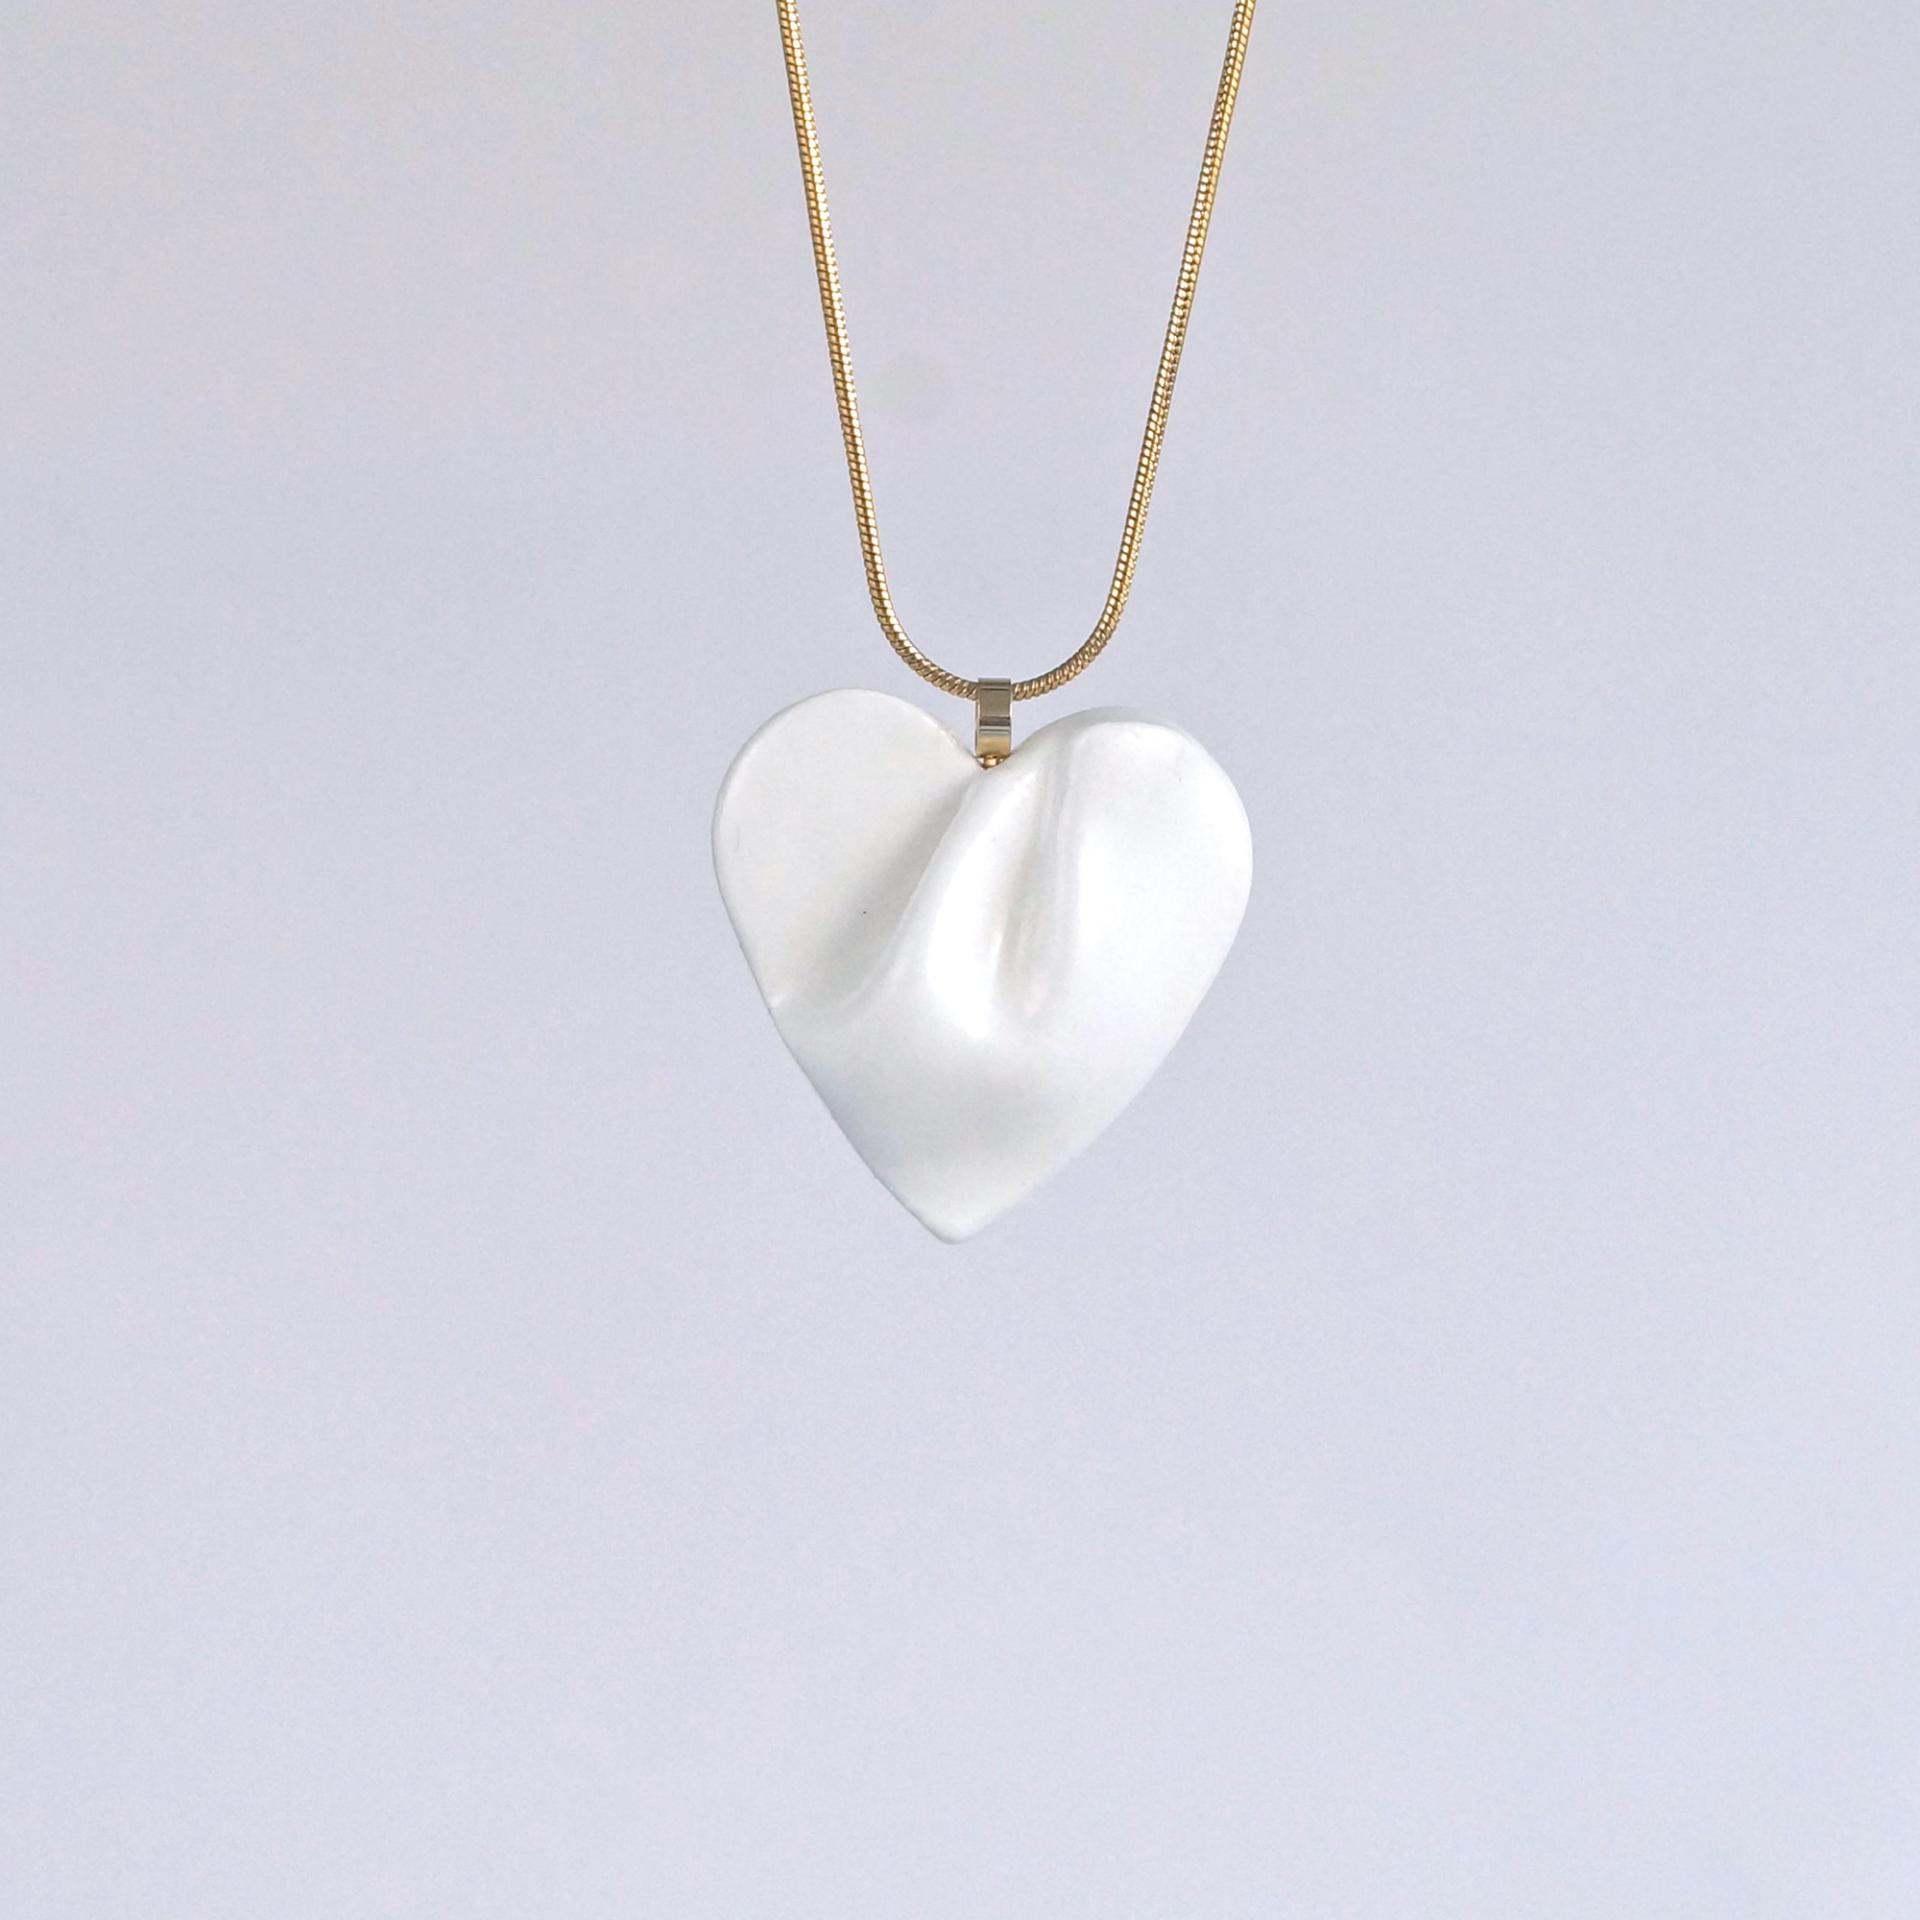 Draped porcelain HEART necklace, medium white porcelain heart, gold, stainless steel snake chain, Bride necklace, white satin